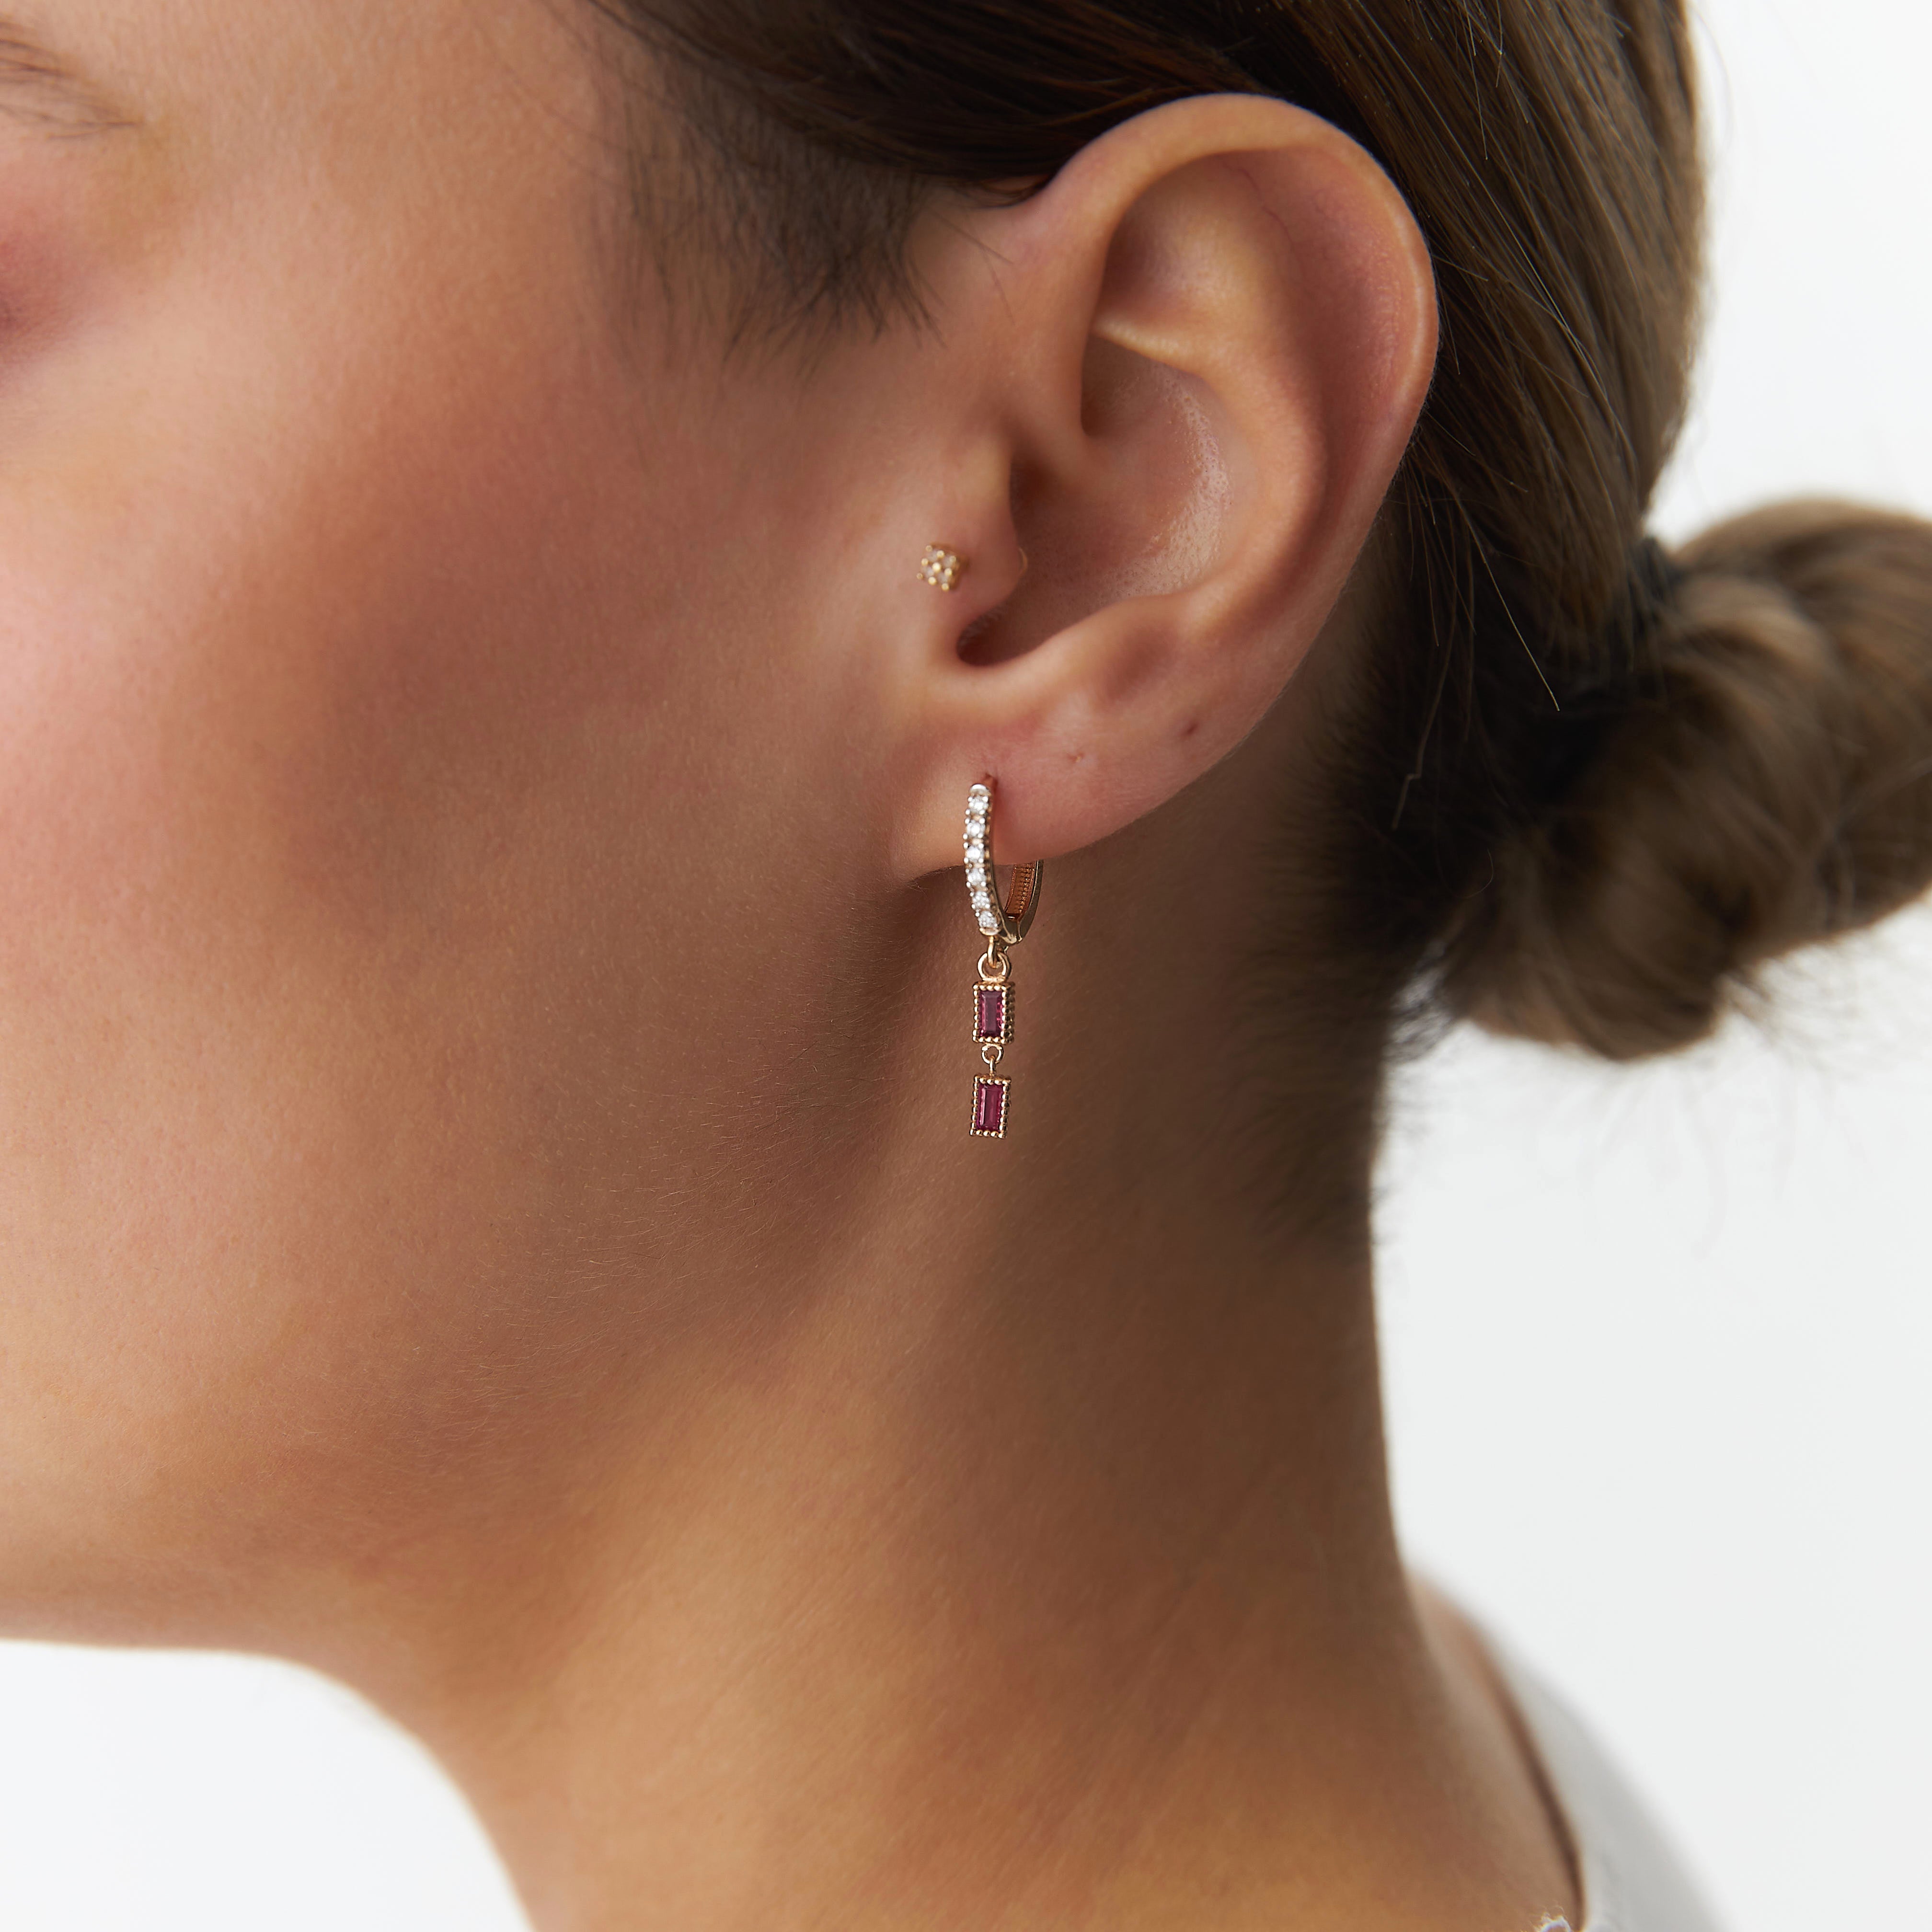 Ruby and Diamond Dangle Earrings in 14K Gold